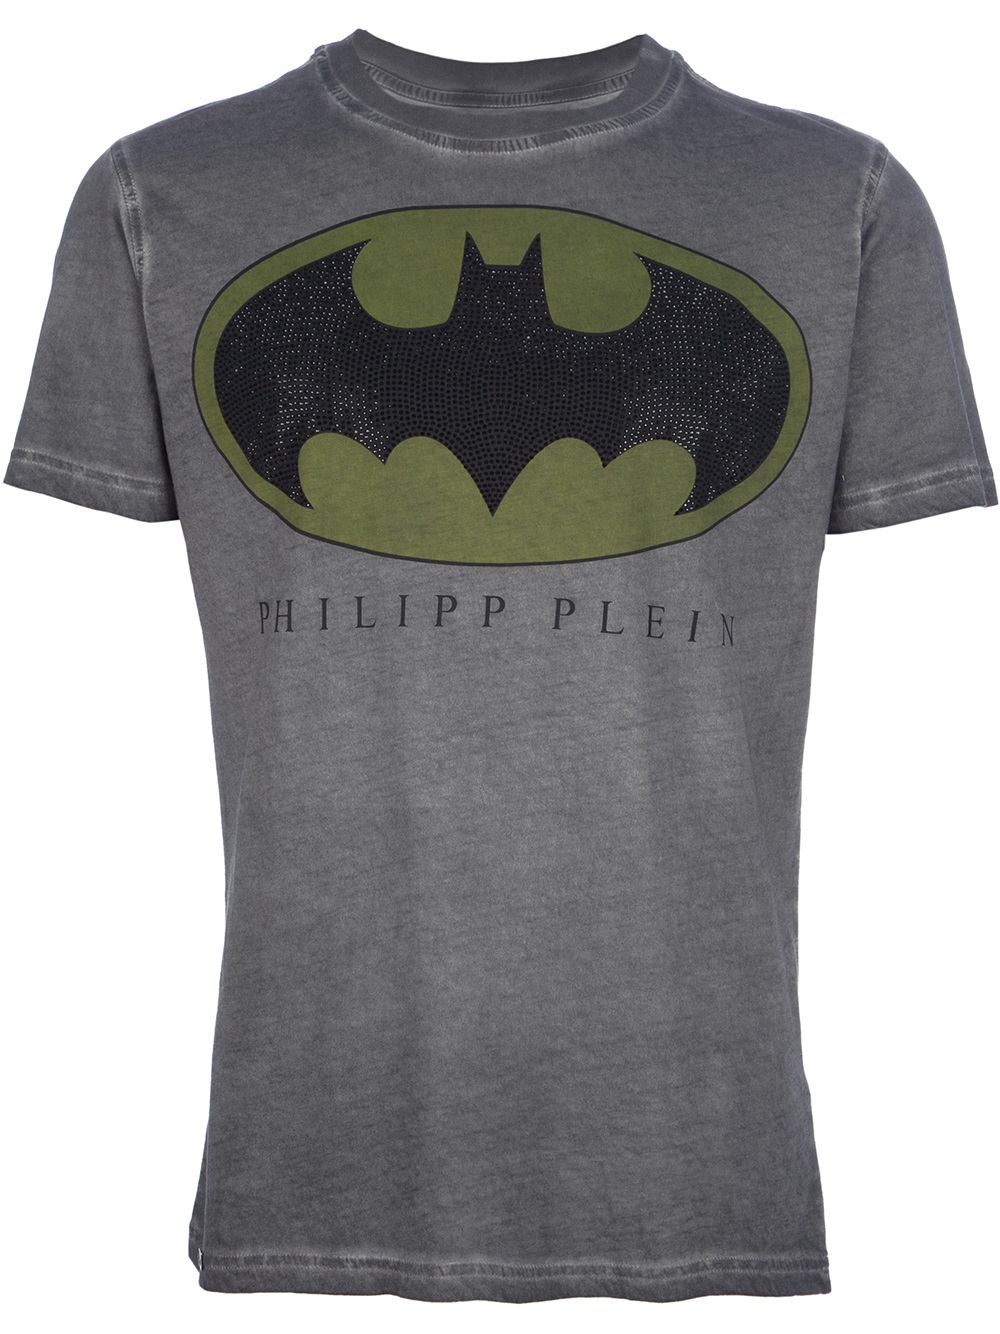 Lyst - Philipp Plein Distressed Batman Tshirt in Gray for Men